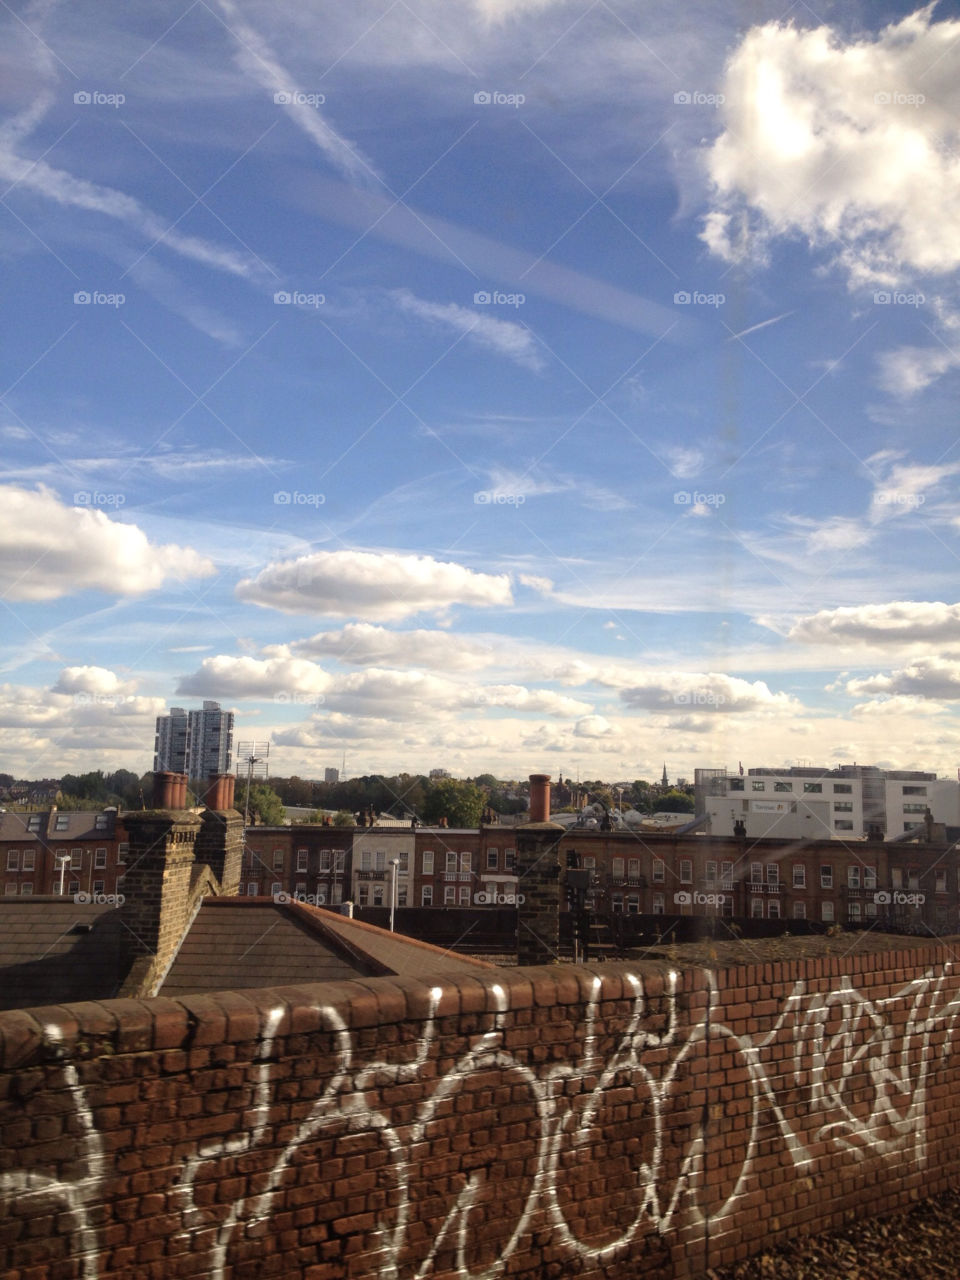 sky graffiti blue london by inkphotography